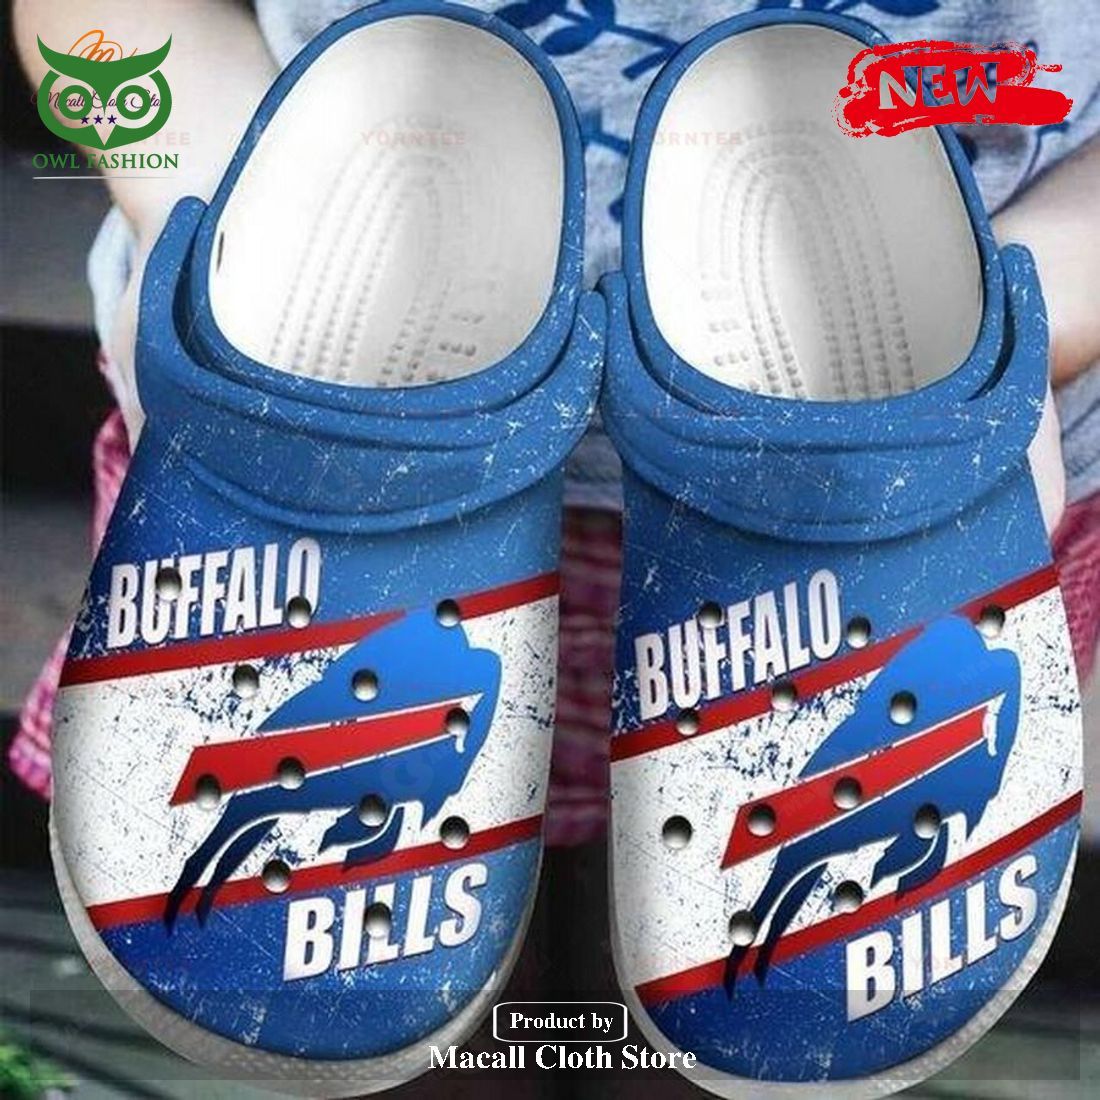 Buffalo Bills Football Unisex Crocs Clog Shoes You look lazy